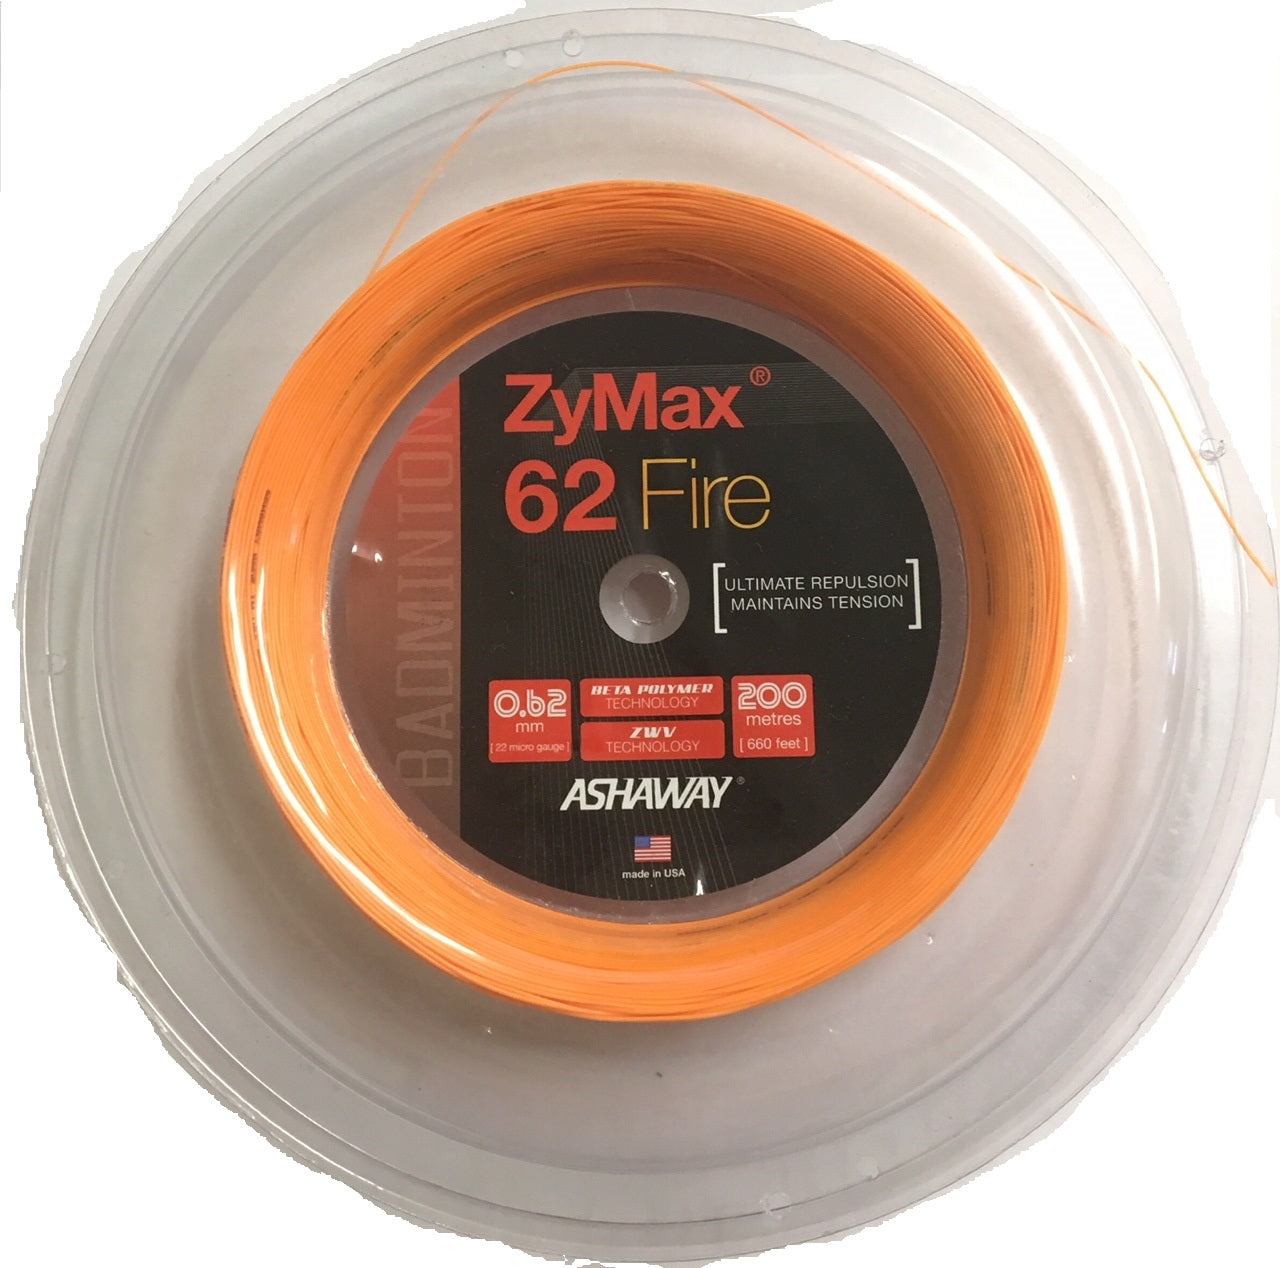 Ashaway ZyMax 62 Fire Badminton String Reel-Fire Orange